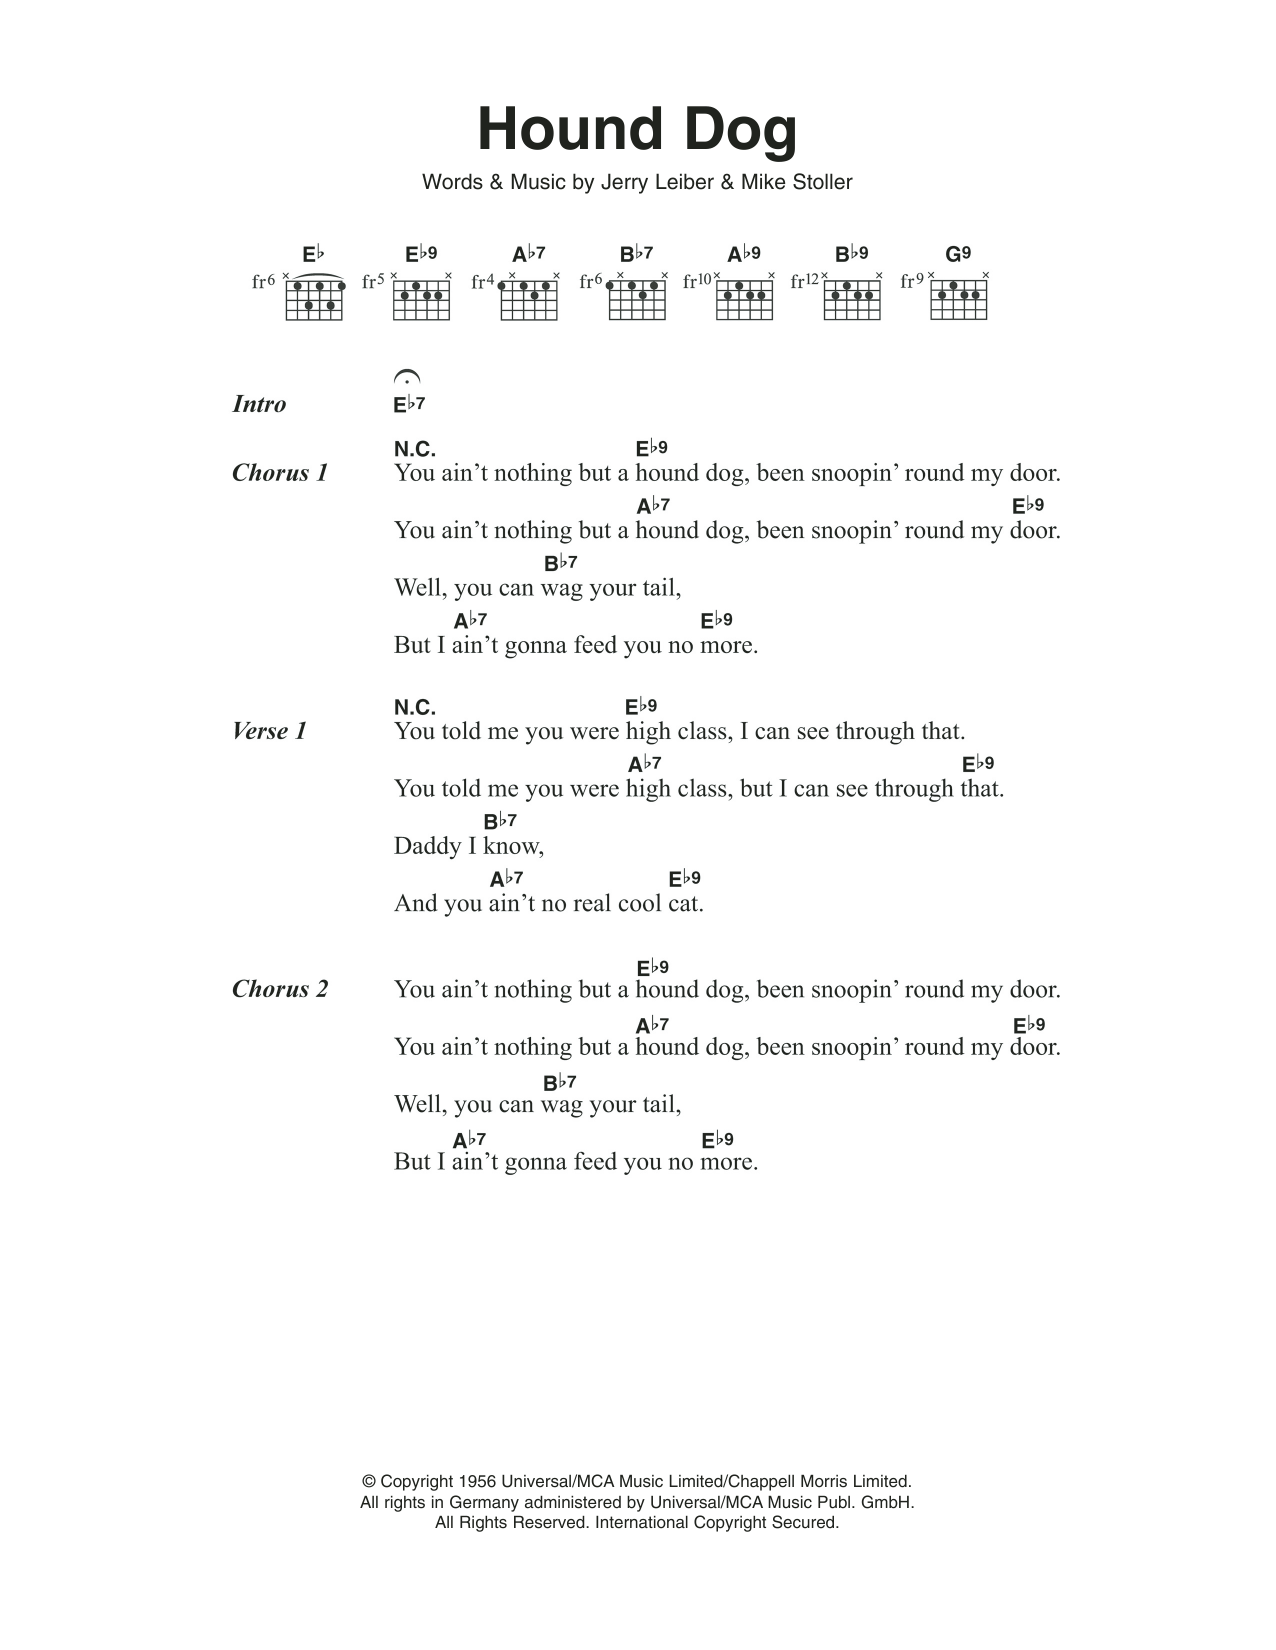 Big Mama Thornton Hound Dog sheet music notes and chords arranged for Guitar Chords/Lyrics